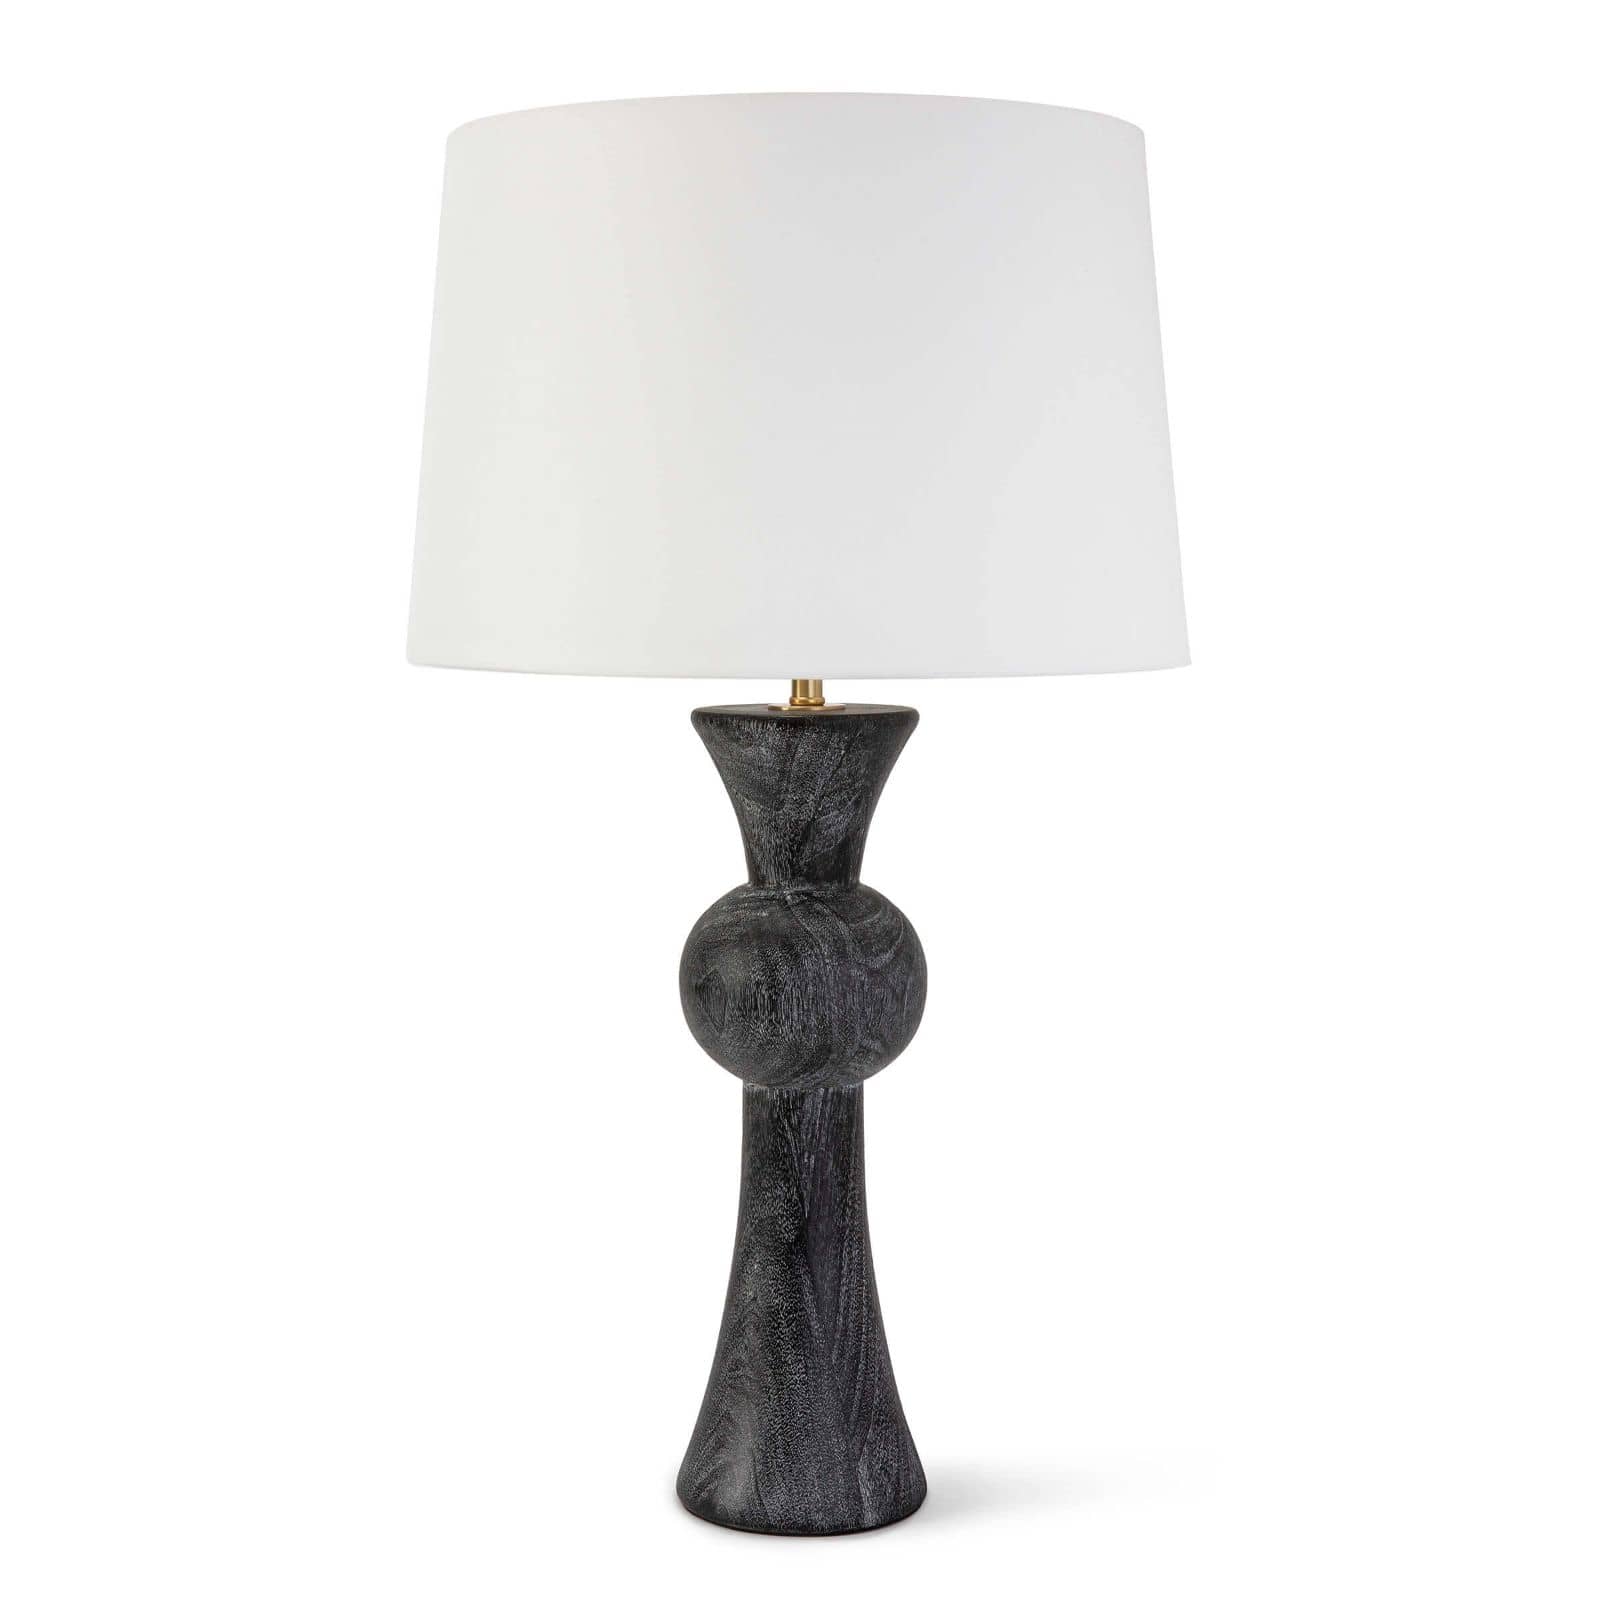 Vaughn Wood Table Lamp in Limed Oak by Regina Andrew